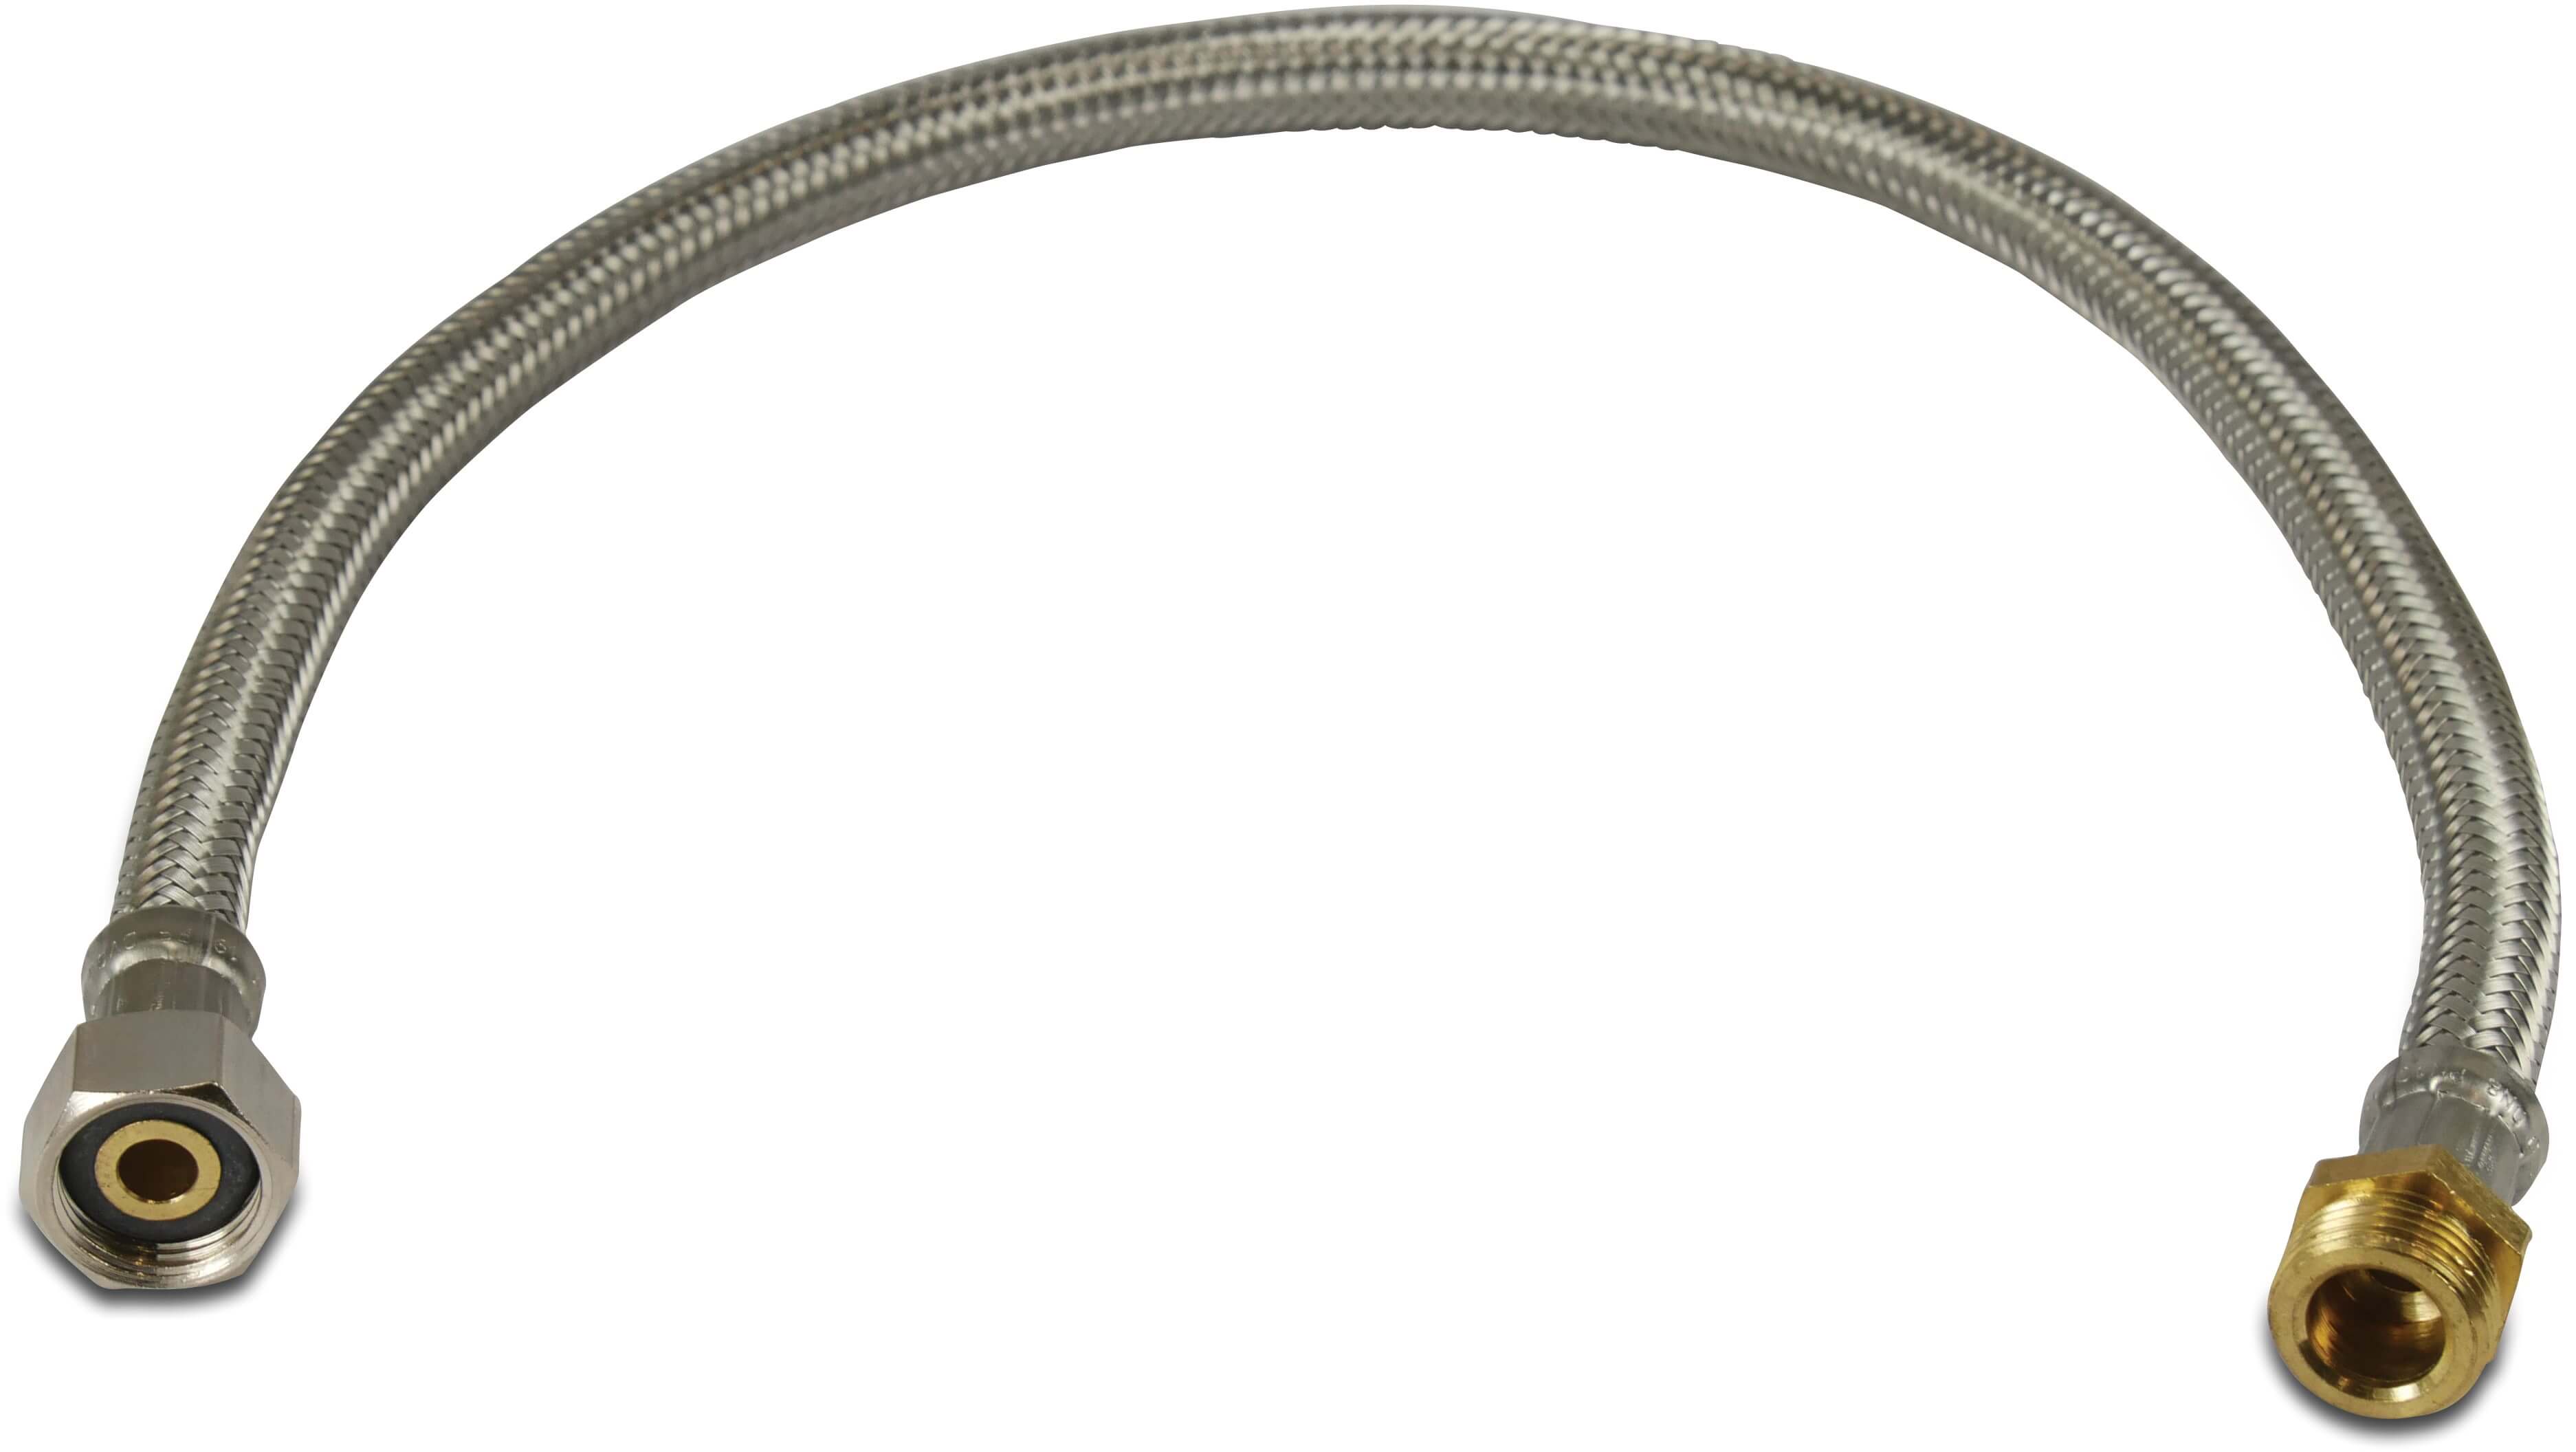 Braided hose stainless steel/silicone 1/2" male thread x female threaded nut 30cm KTW/DVGW type straight